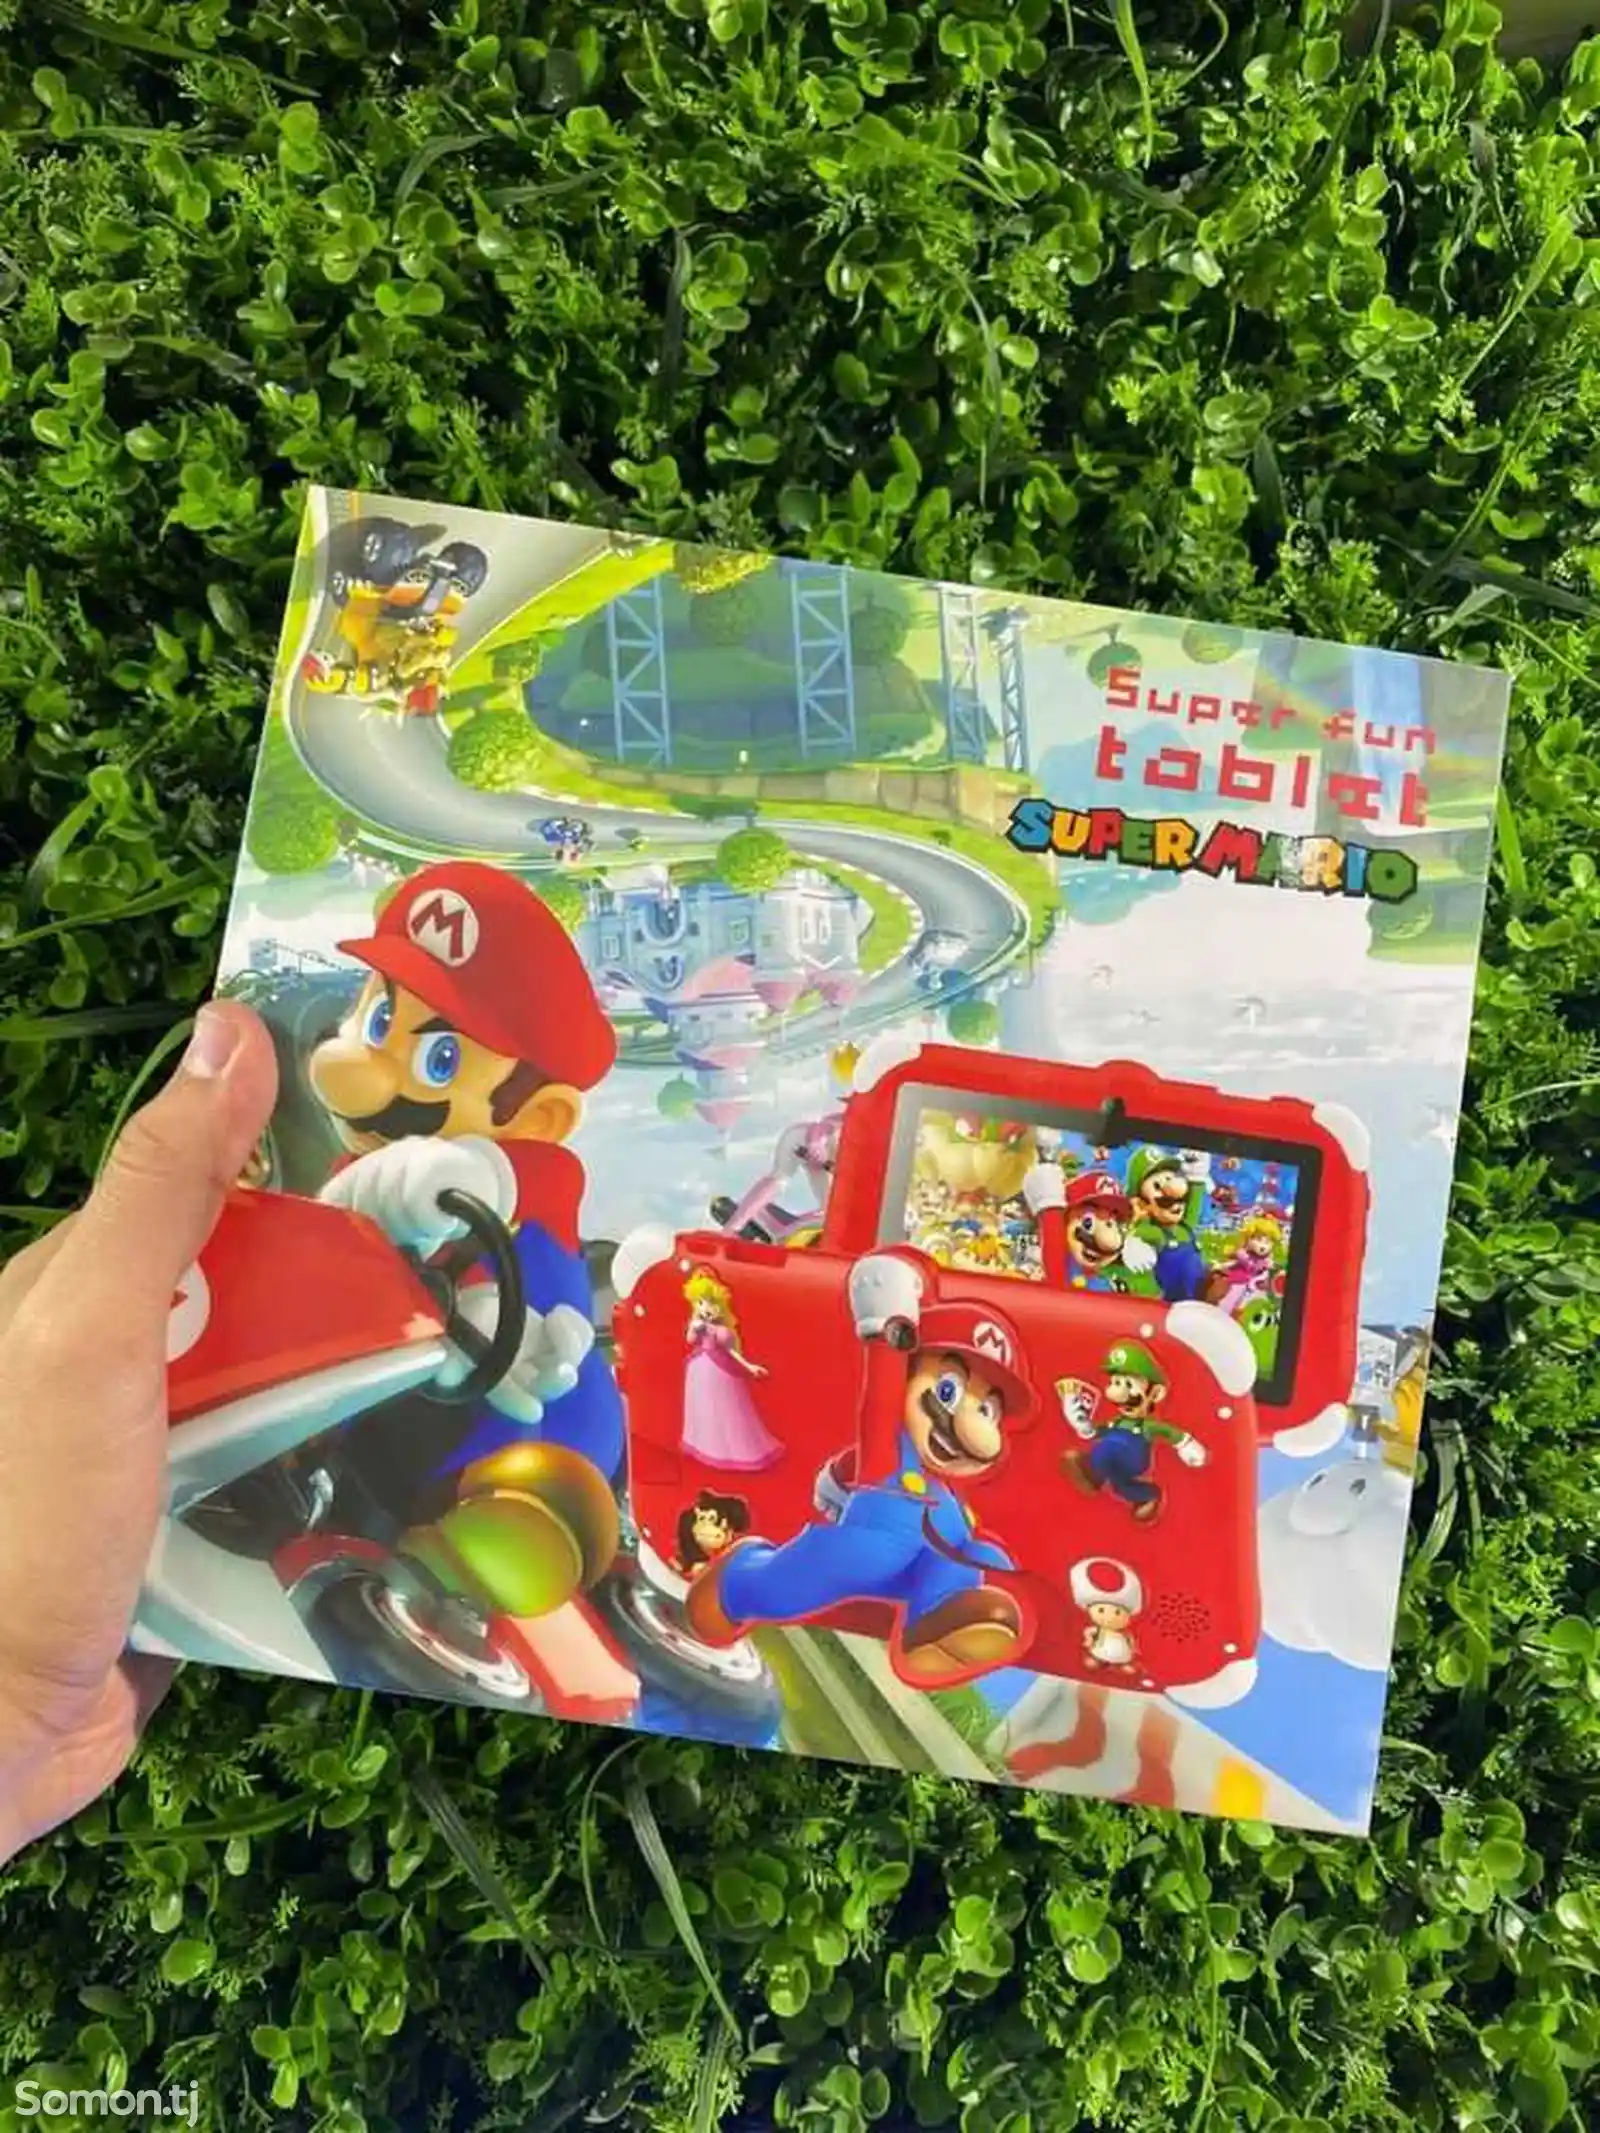 Детский планшет Super Mario-7